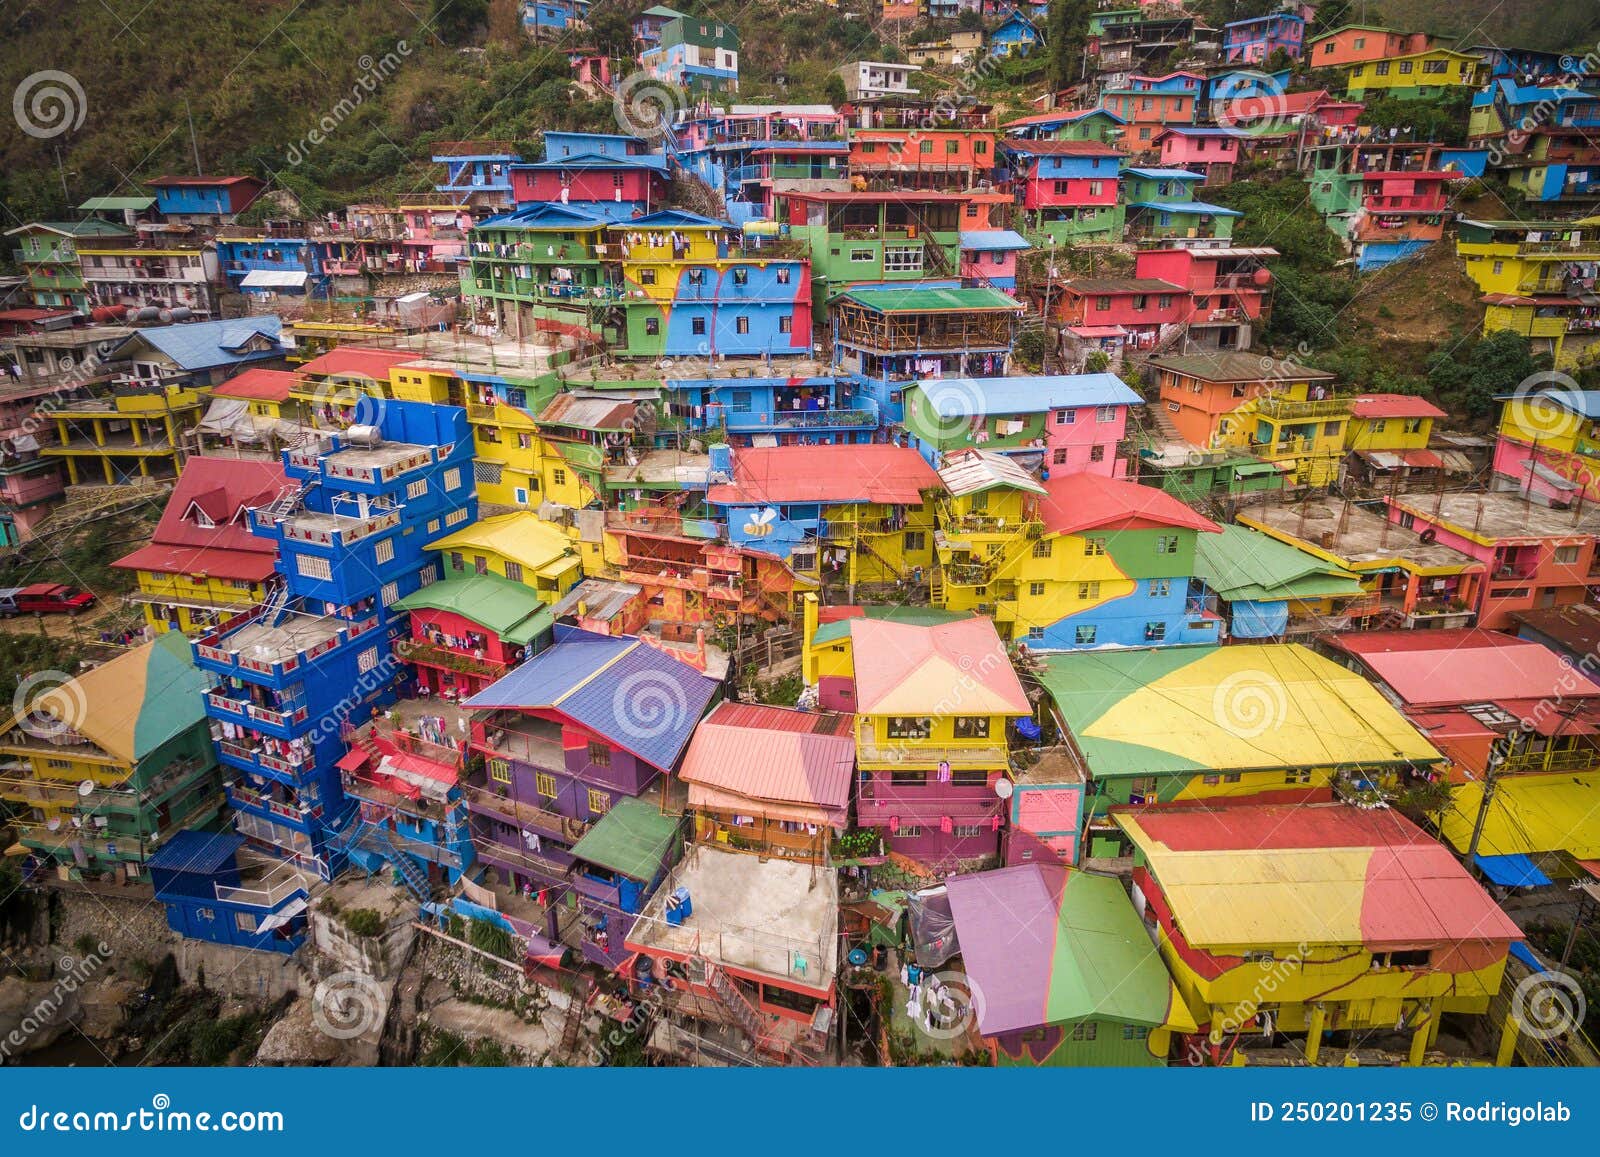 aerial view of the colourful stobosa hillside homes artwork in la trinidad, benguet, philippines